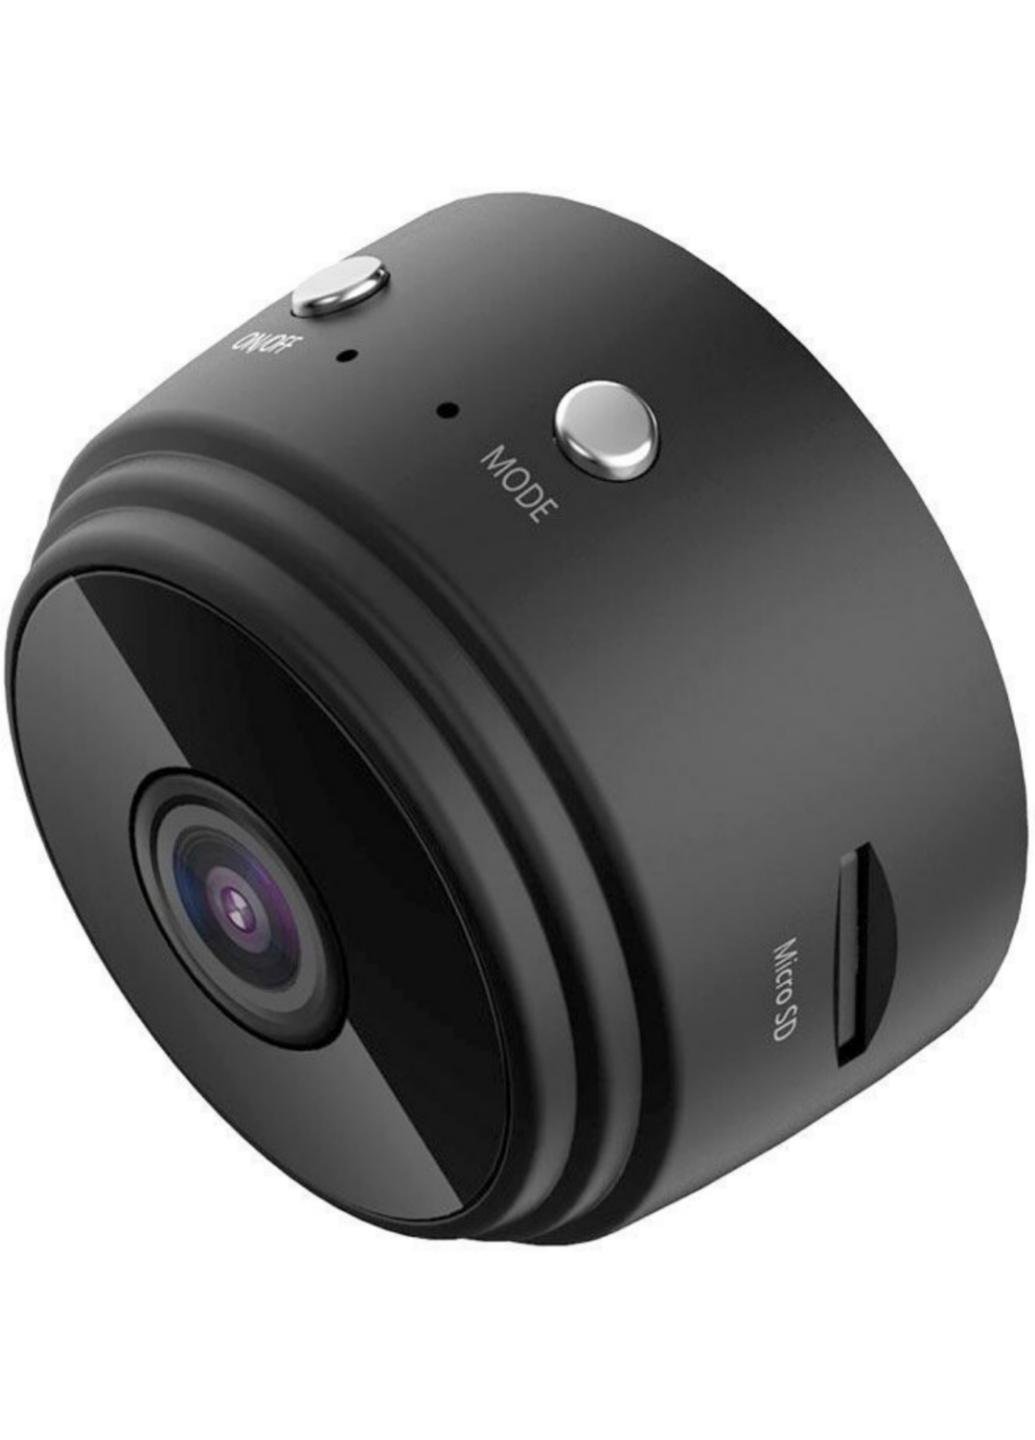 Камера миниатюрная IP P2P HD c Wifi A9 со съемкой ночного видео 4,5х4,5х2,5 см Черный (WI9M)